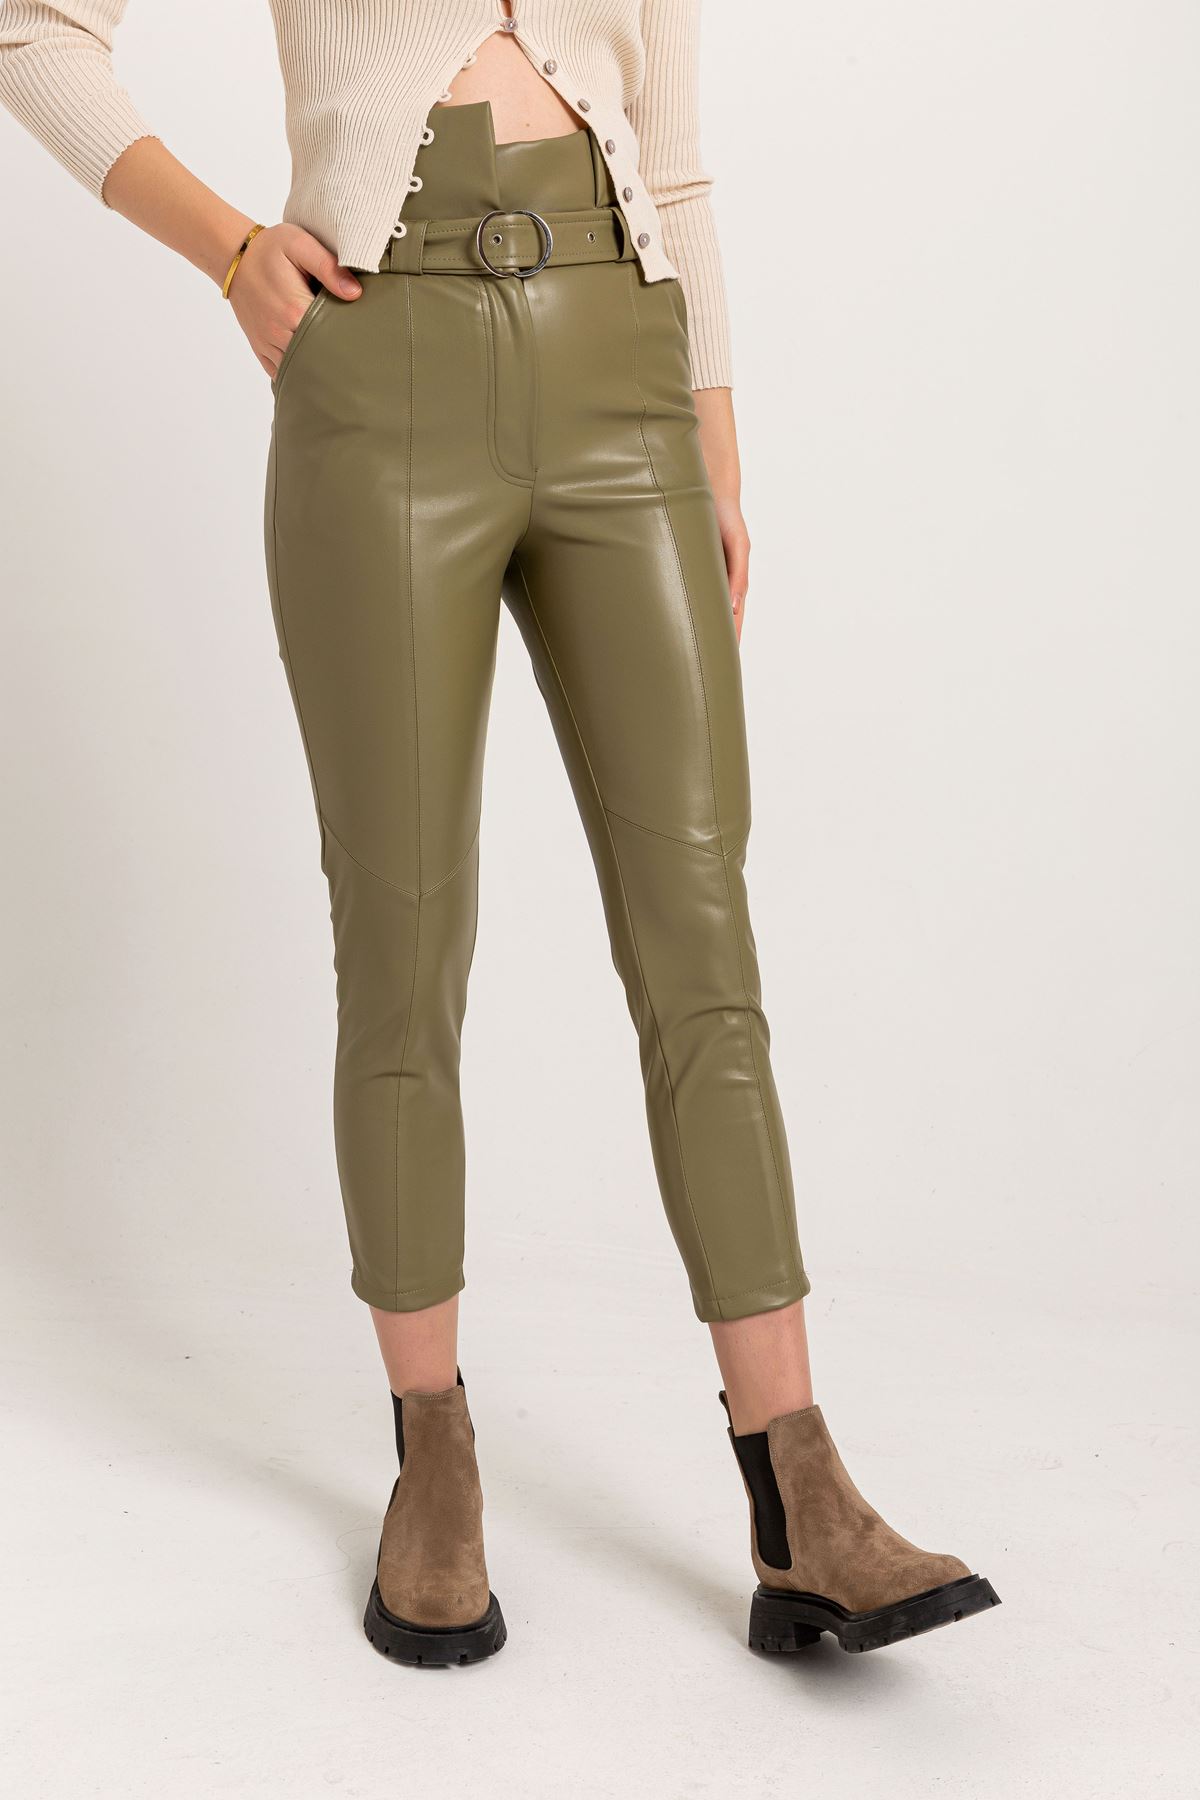 Leather Fabric Long Tigth Fit High Waist Belt Women'S Trouser - Khaki 